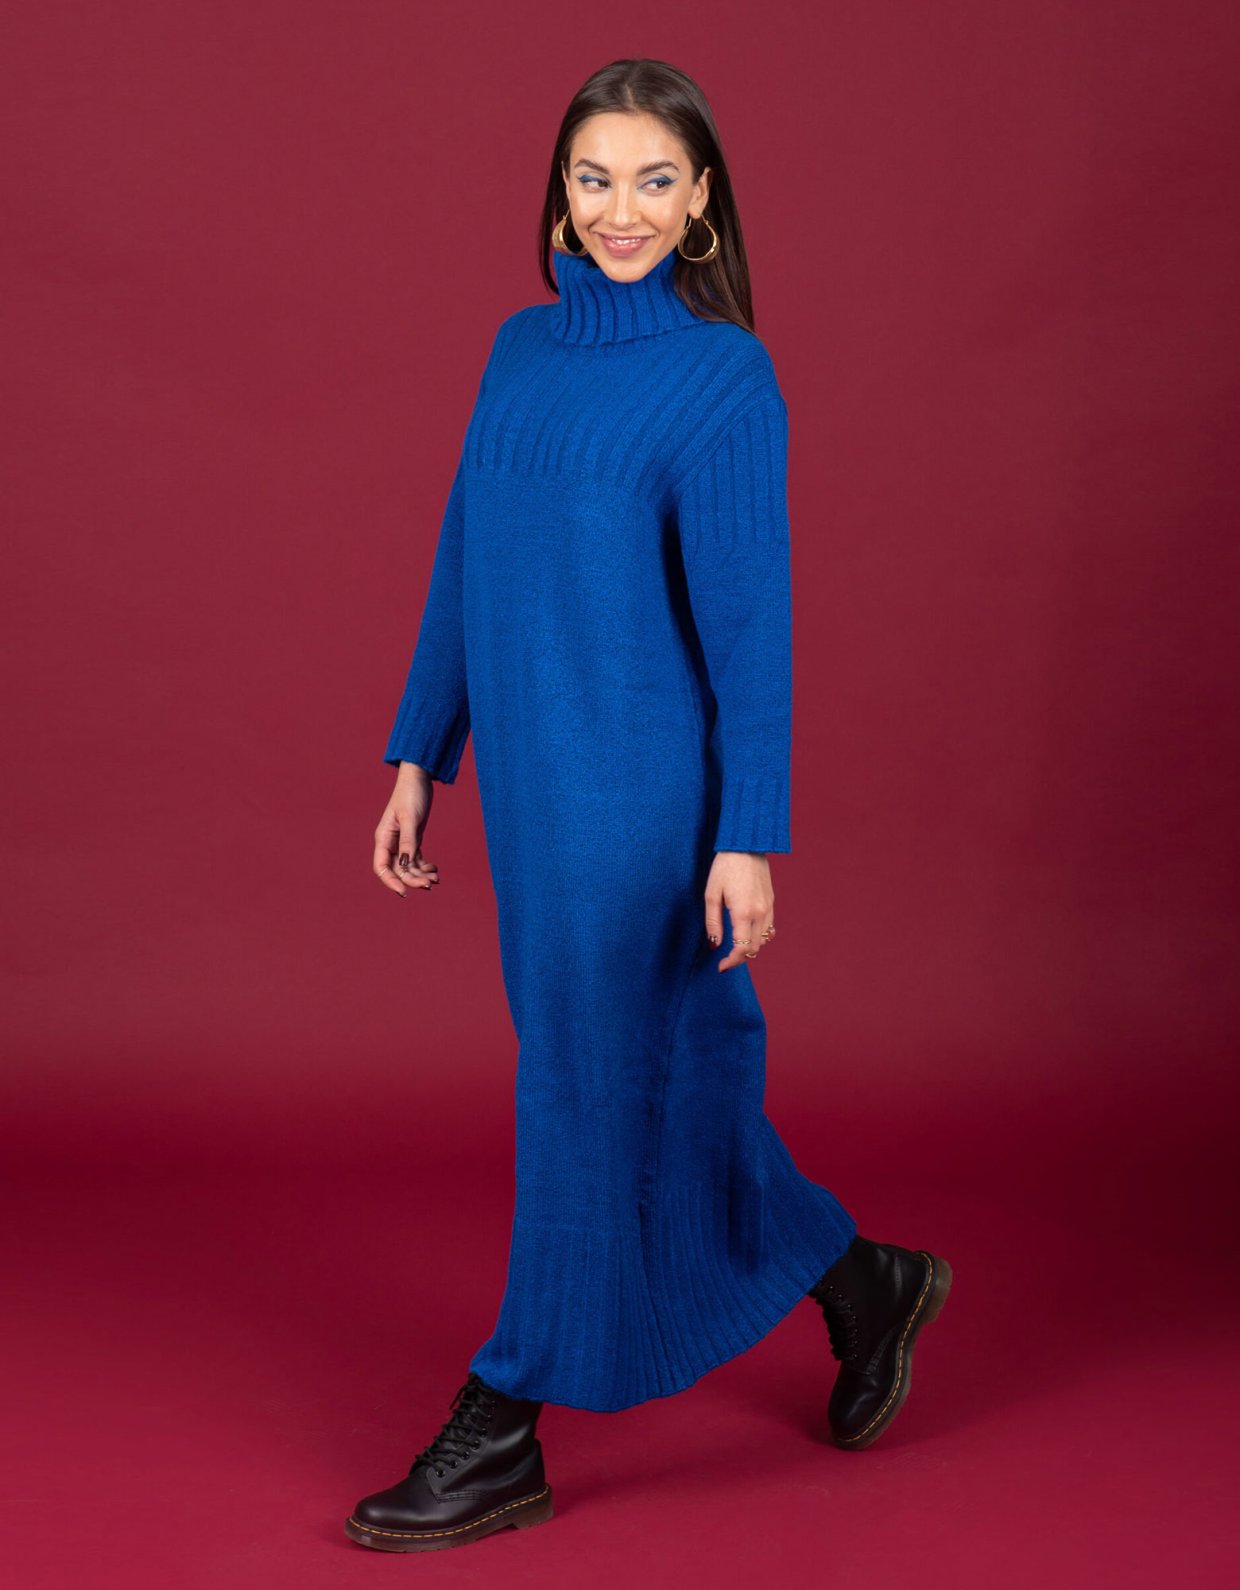 Chaton Gustav knit dress blue